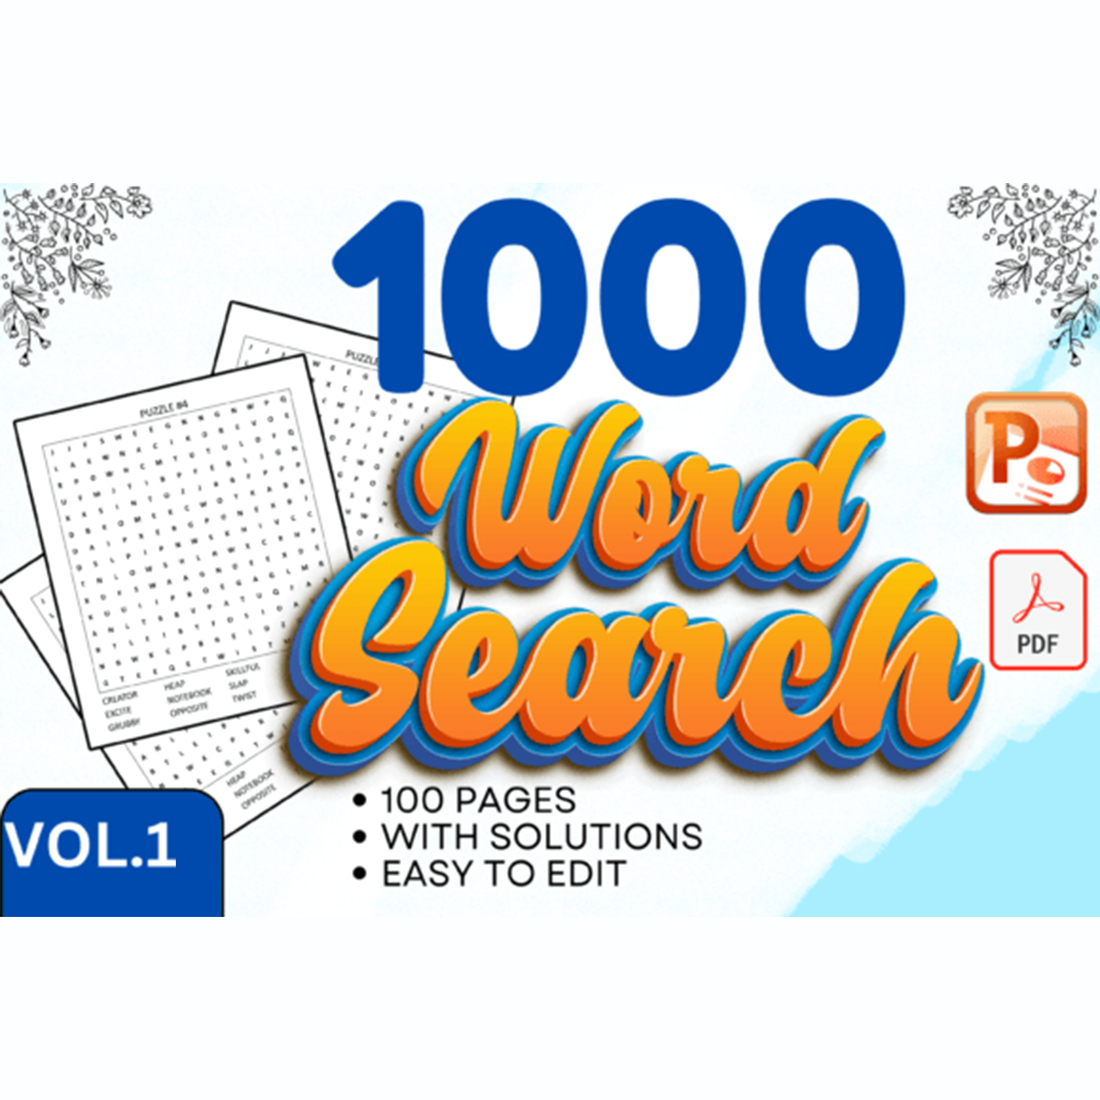 1000-word-search-puzzle-solution-masterbundles